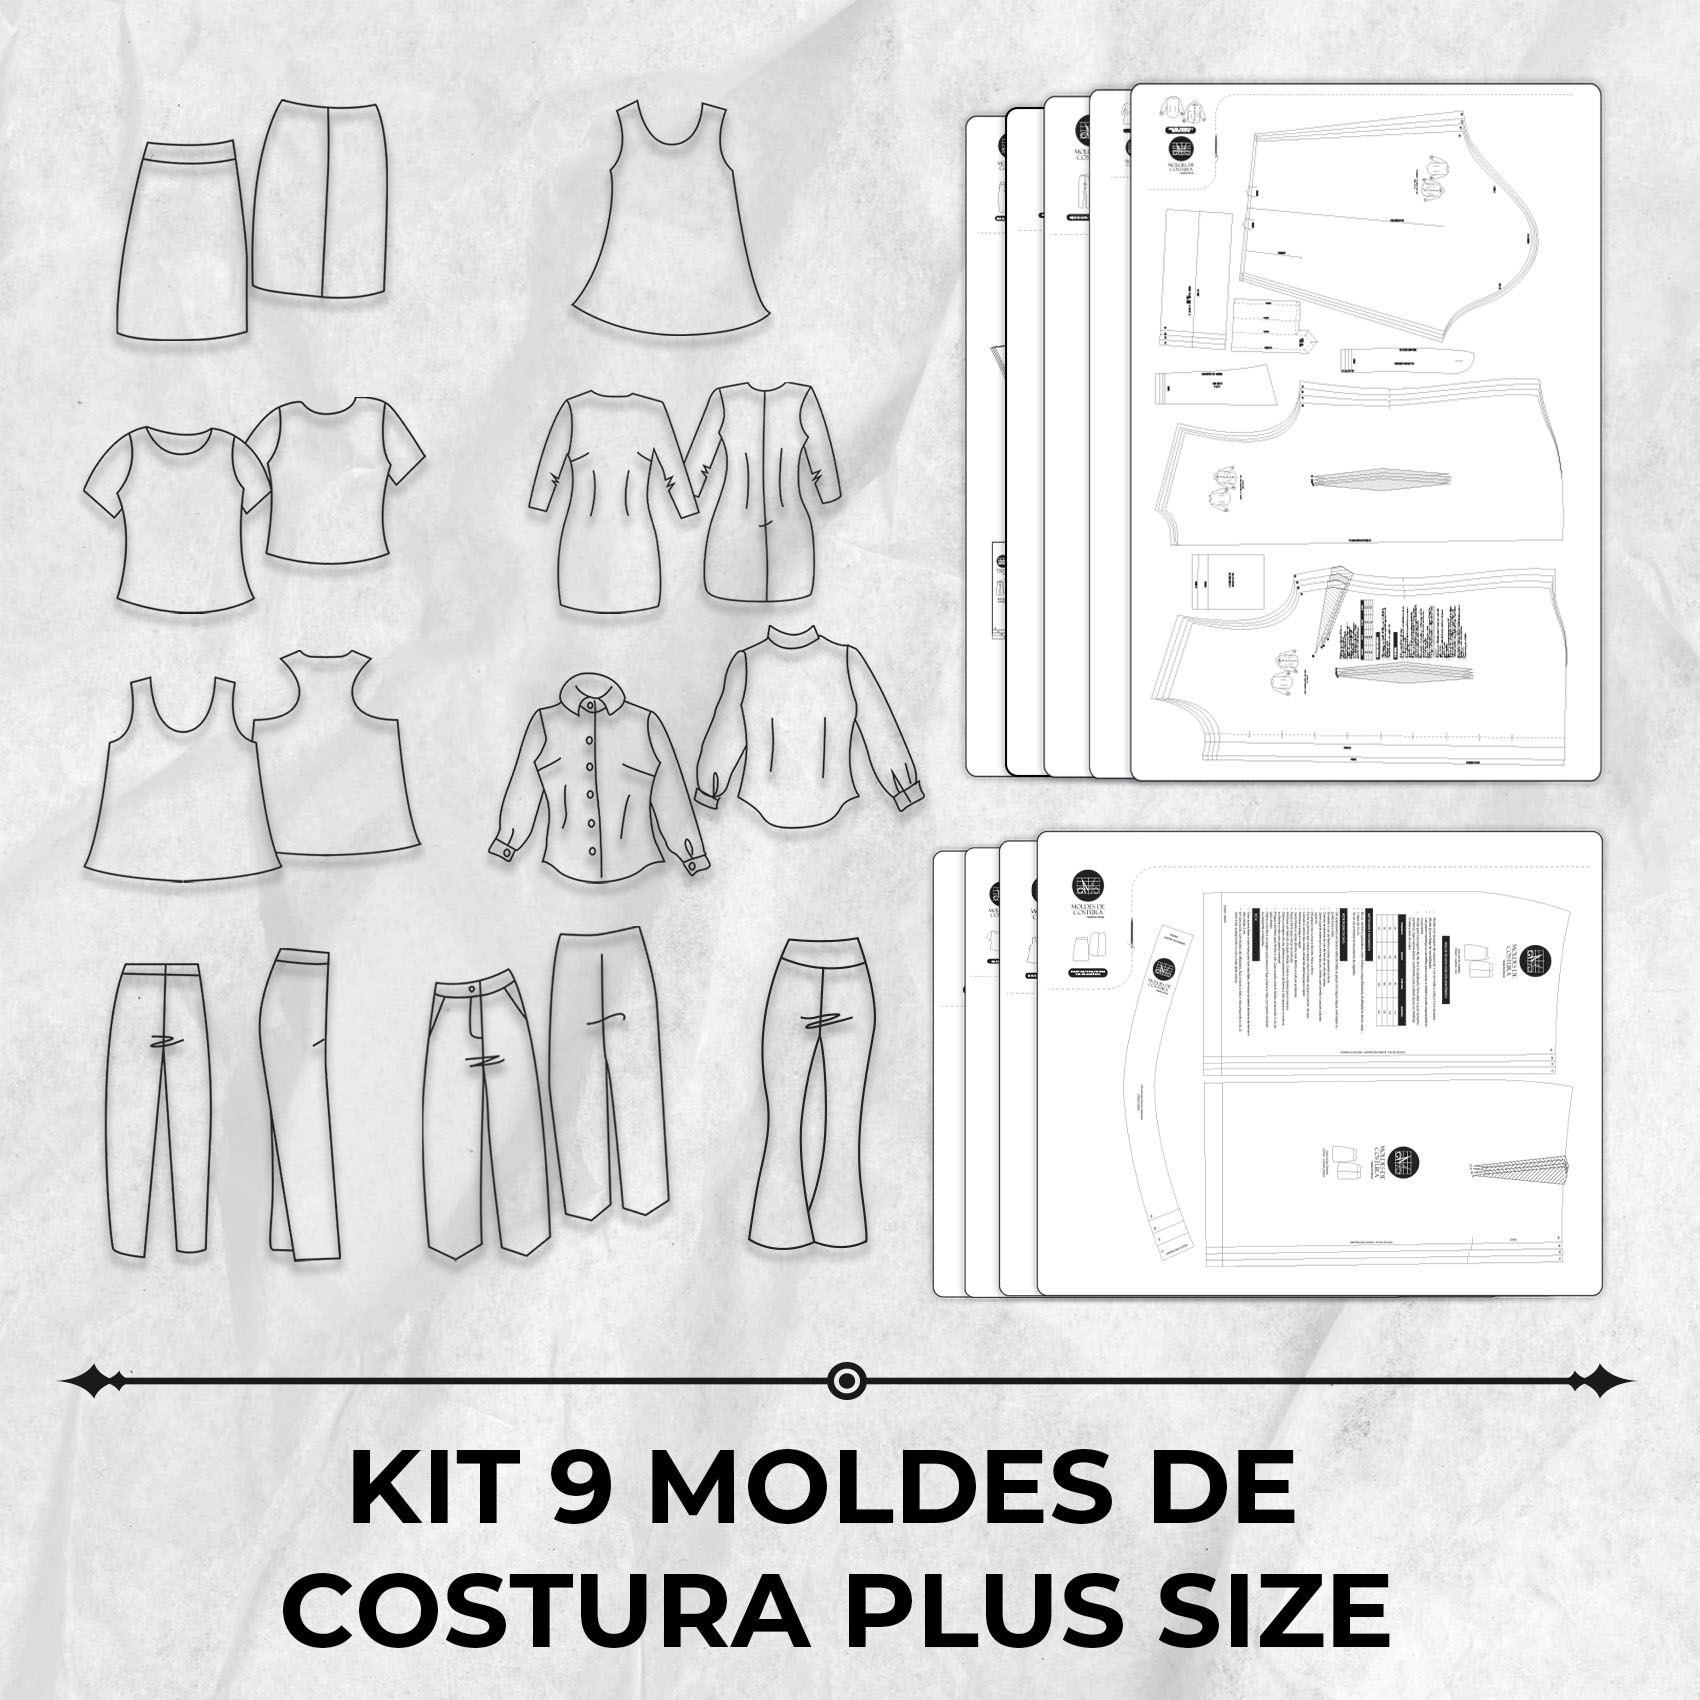 Kit 9 moldes de costura plus size by Marlene Mukai